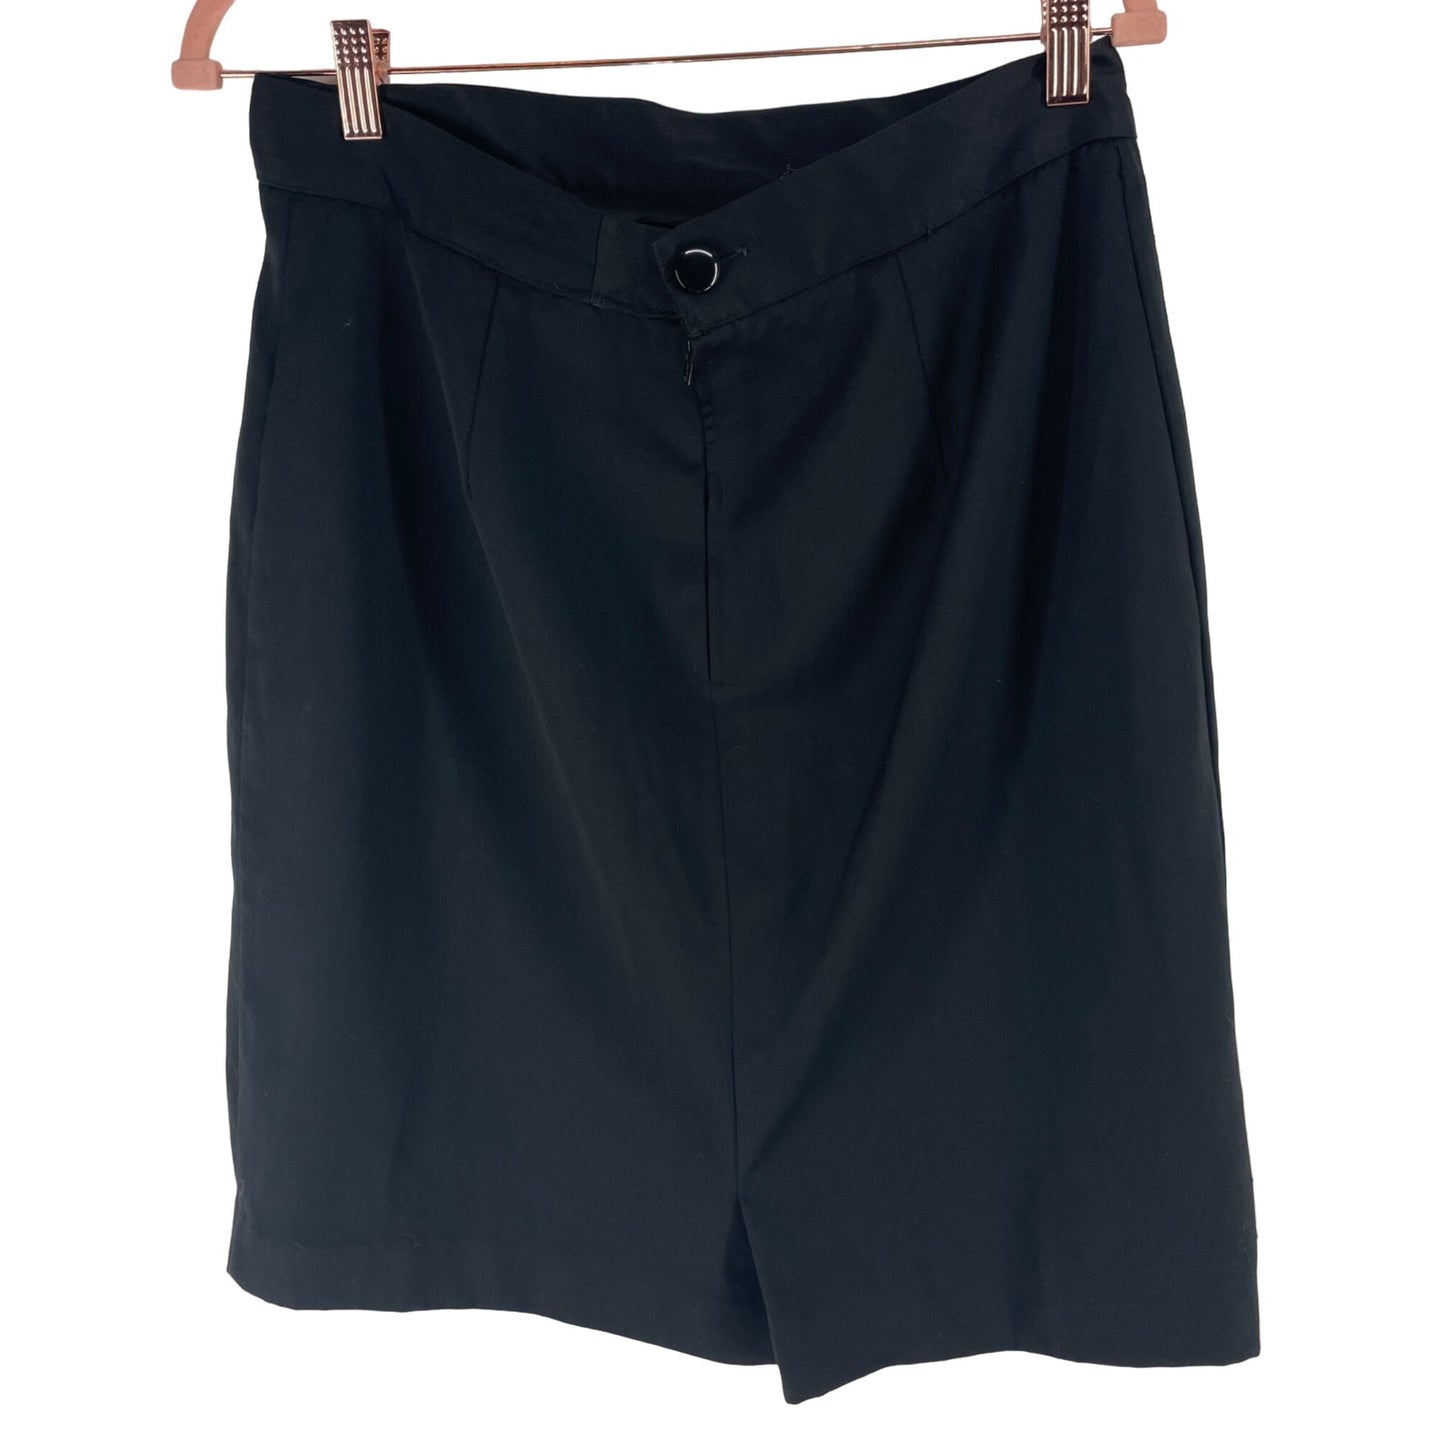 Genny Women's Large Black Midi Skirt